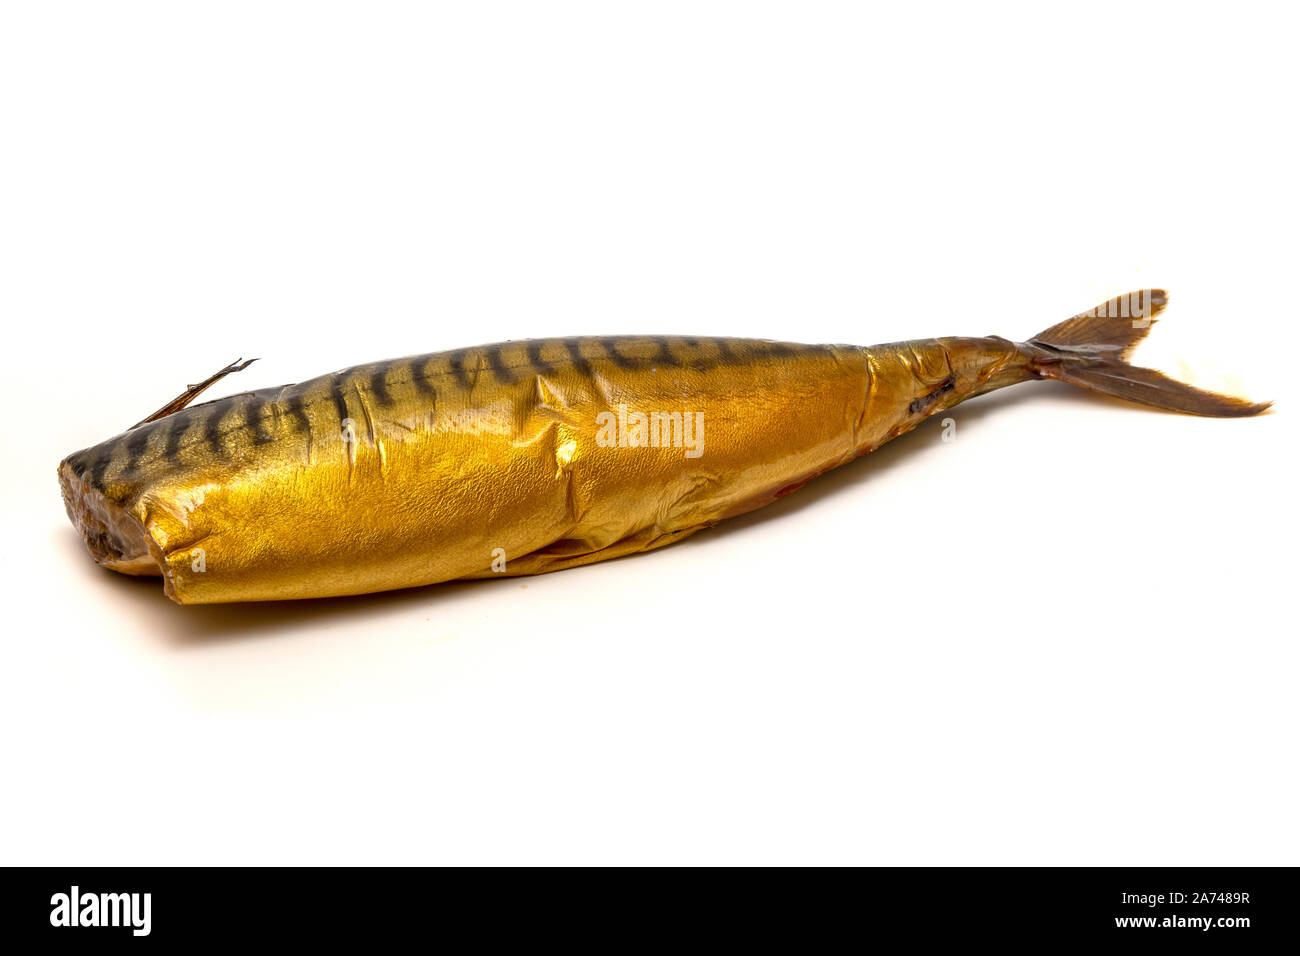 Smoked atlantic mackerel (Scomber scombrus) on a white background Stock Photo